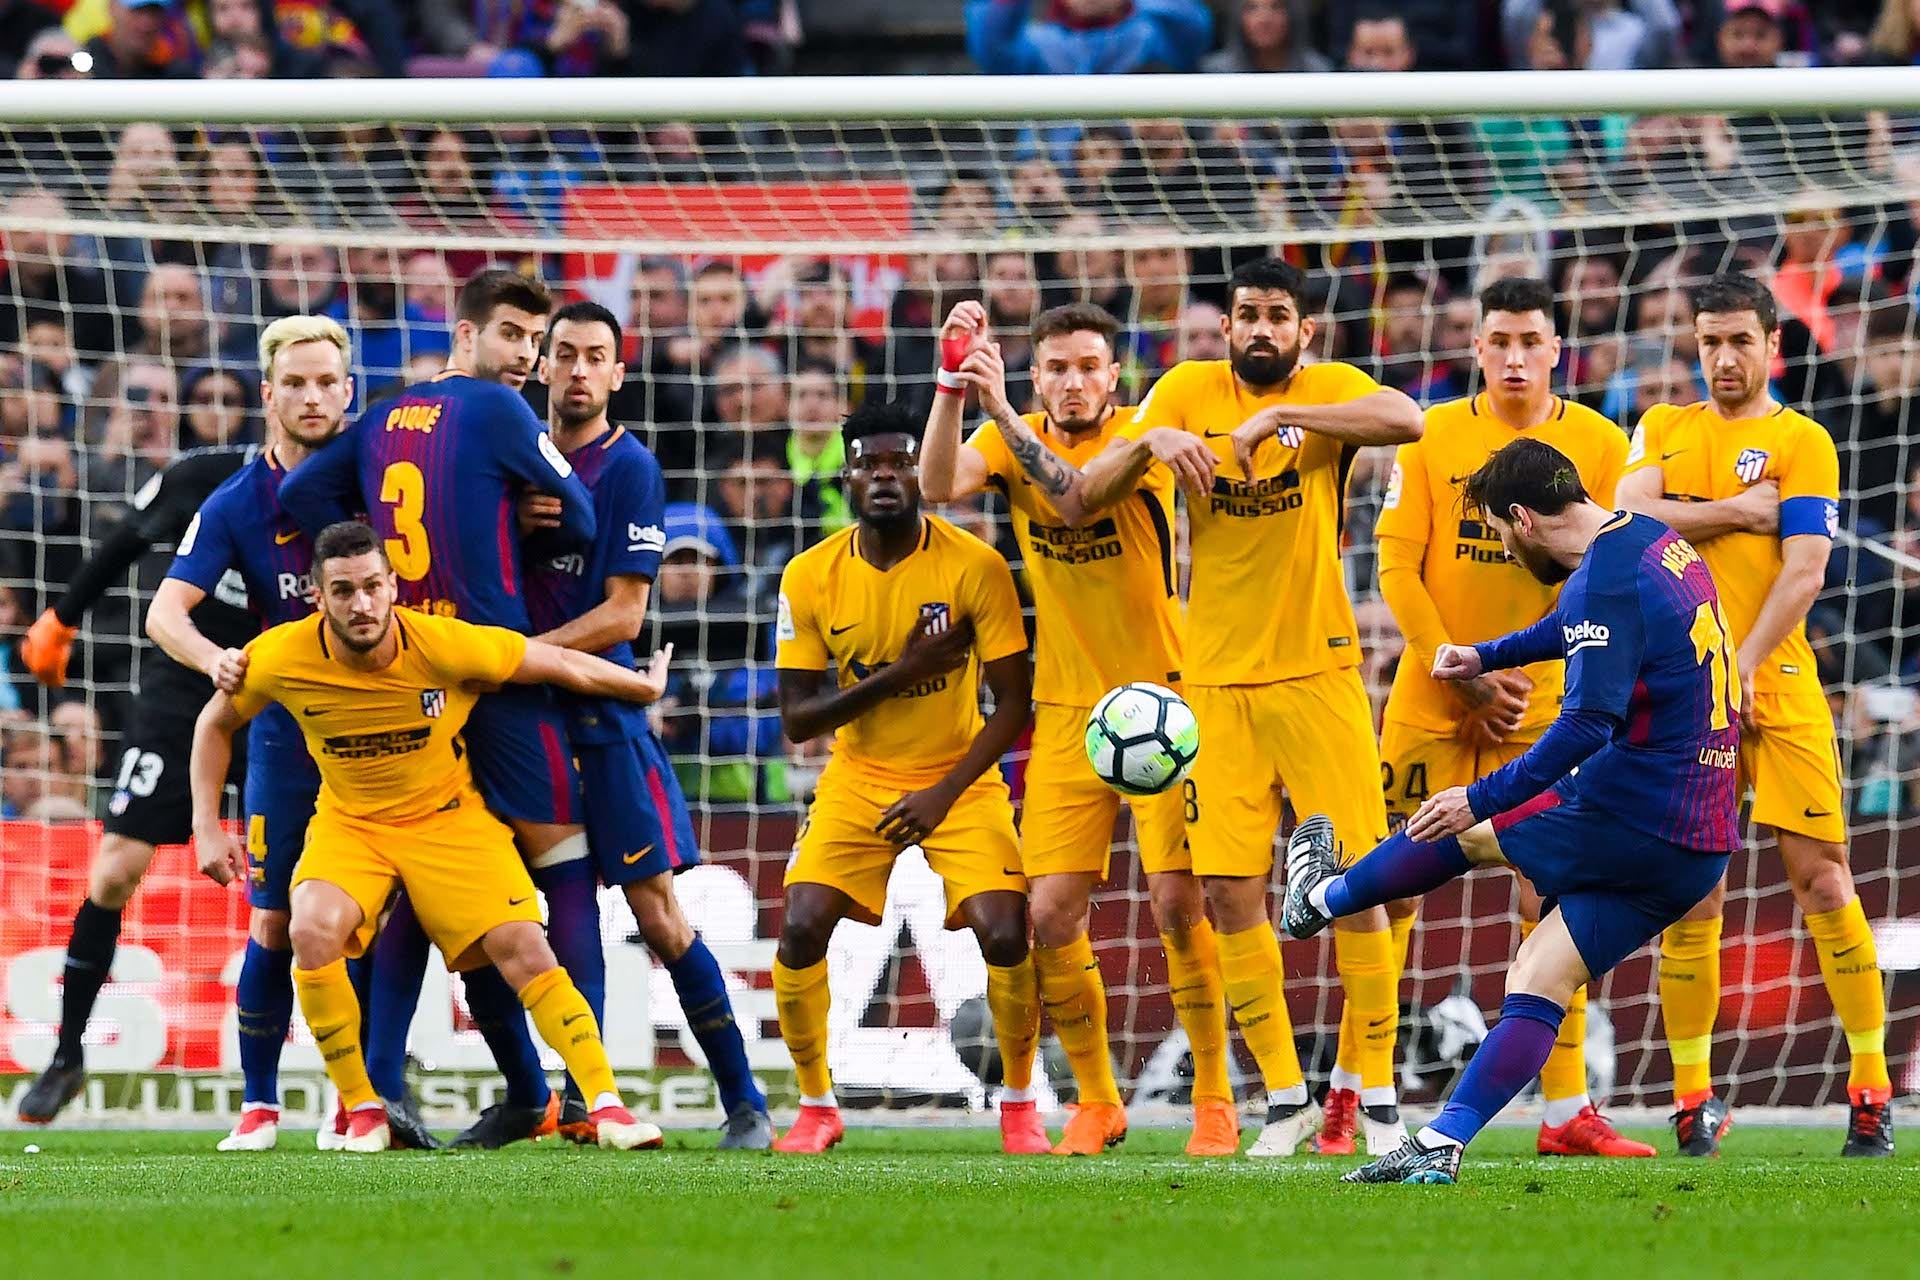 Salvaje seriamente Lesionarse El francotirador argentino o cómo Messi aprendió a tirar las faltas |  Goal.com Espana